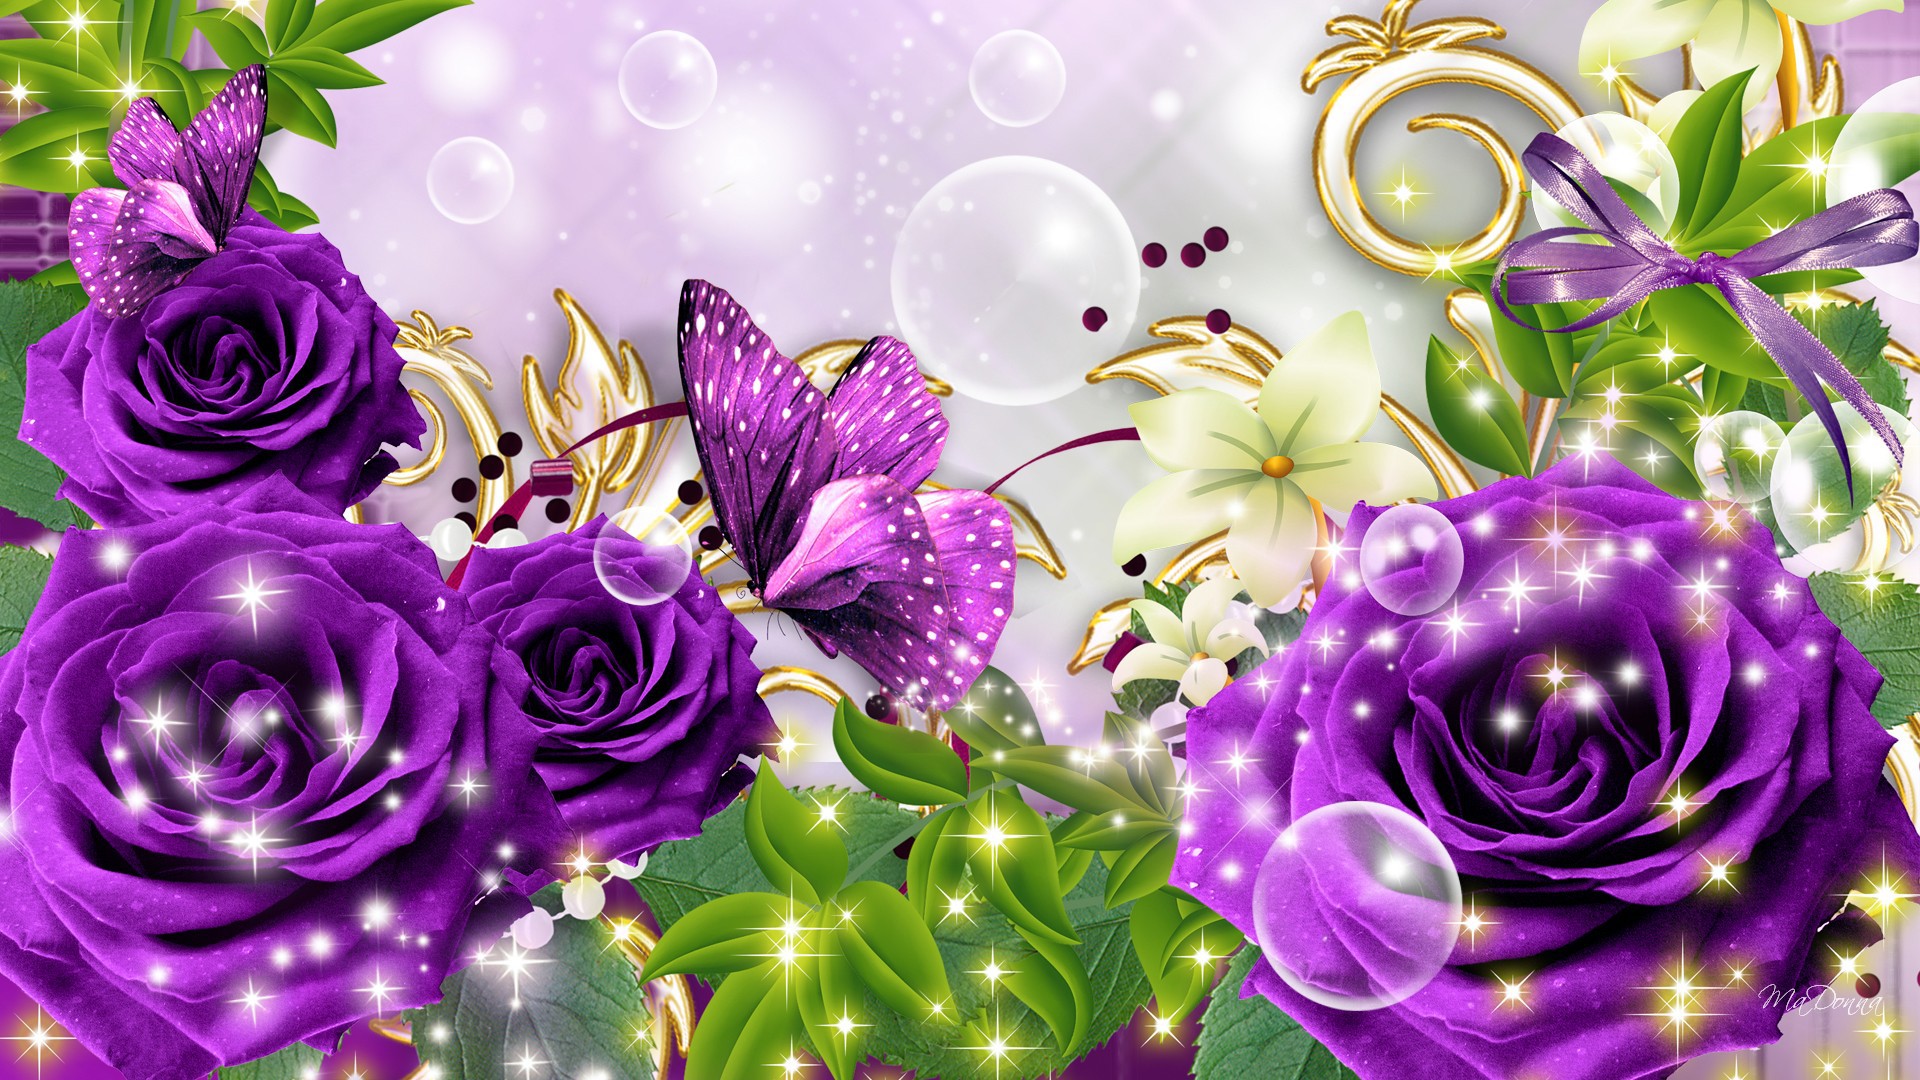 Purple Roses And Butterflies - 1517x853 Wallpaper - teahub.io